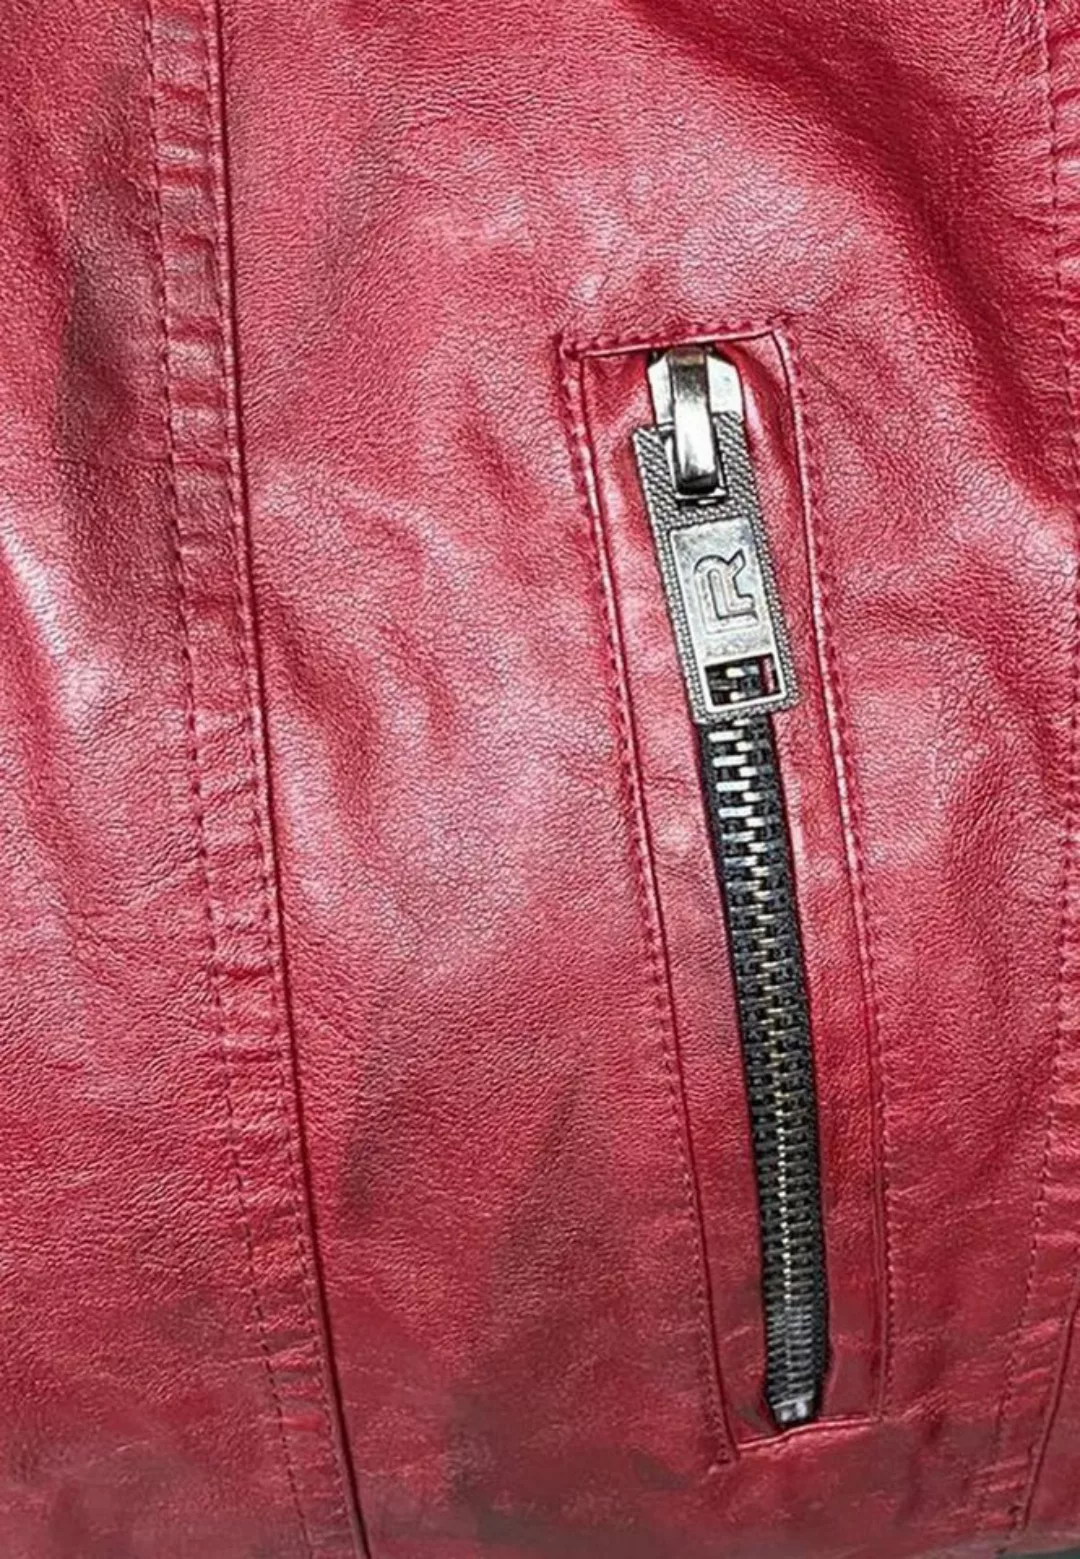 RedBridge Lederimitatjacke aus Kunstleder und abnehmbarer Kapuze hochwertig günstig online kaufen